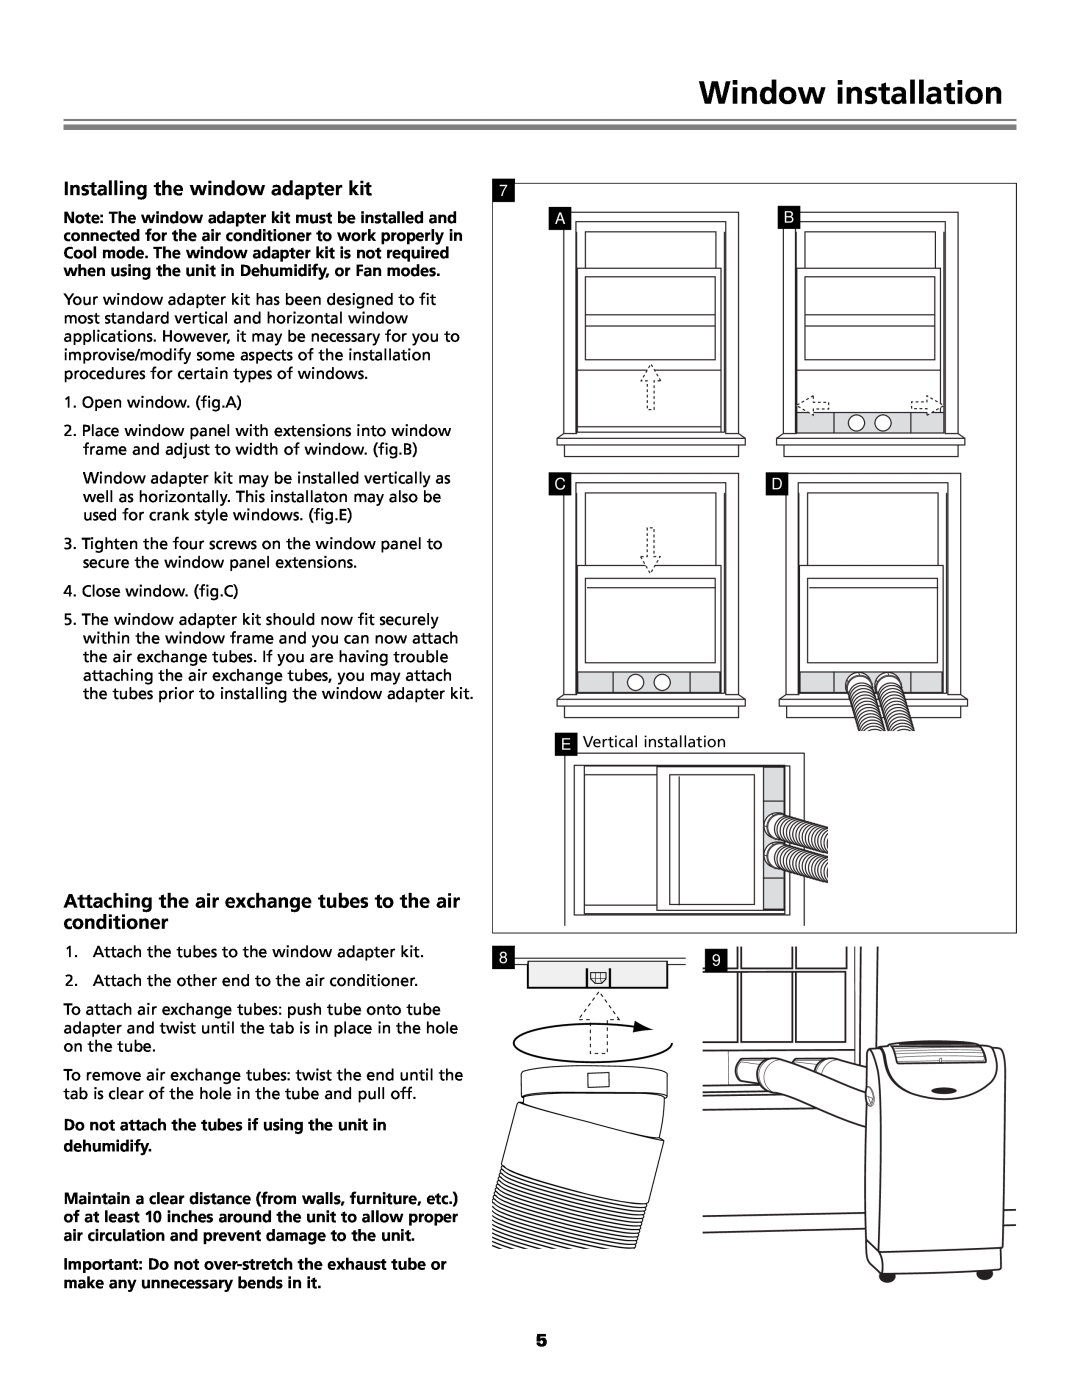 Fedders Portable Dehumidifier Window installation, Installing the window adapter kit, E Vertical installation 